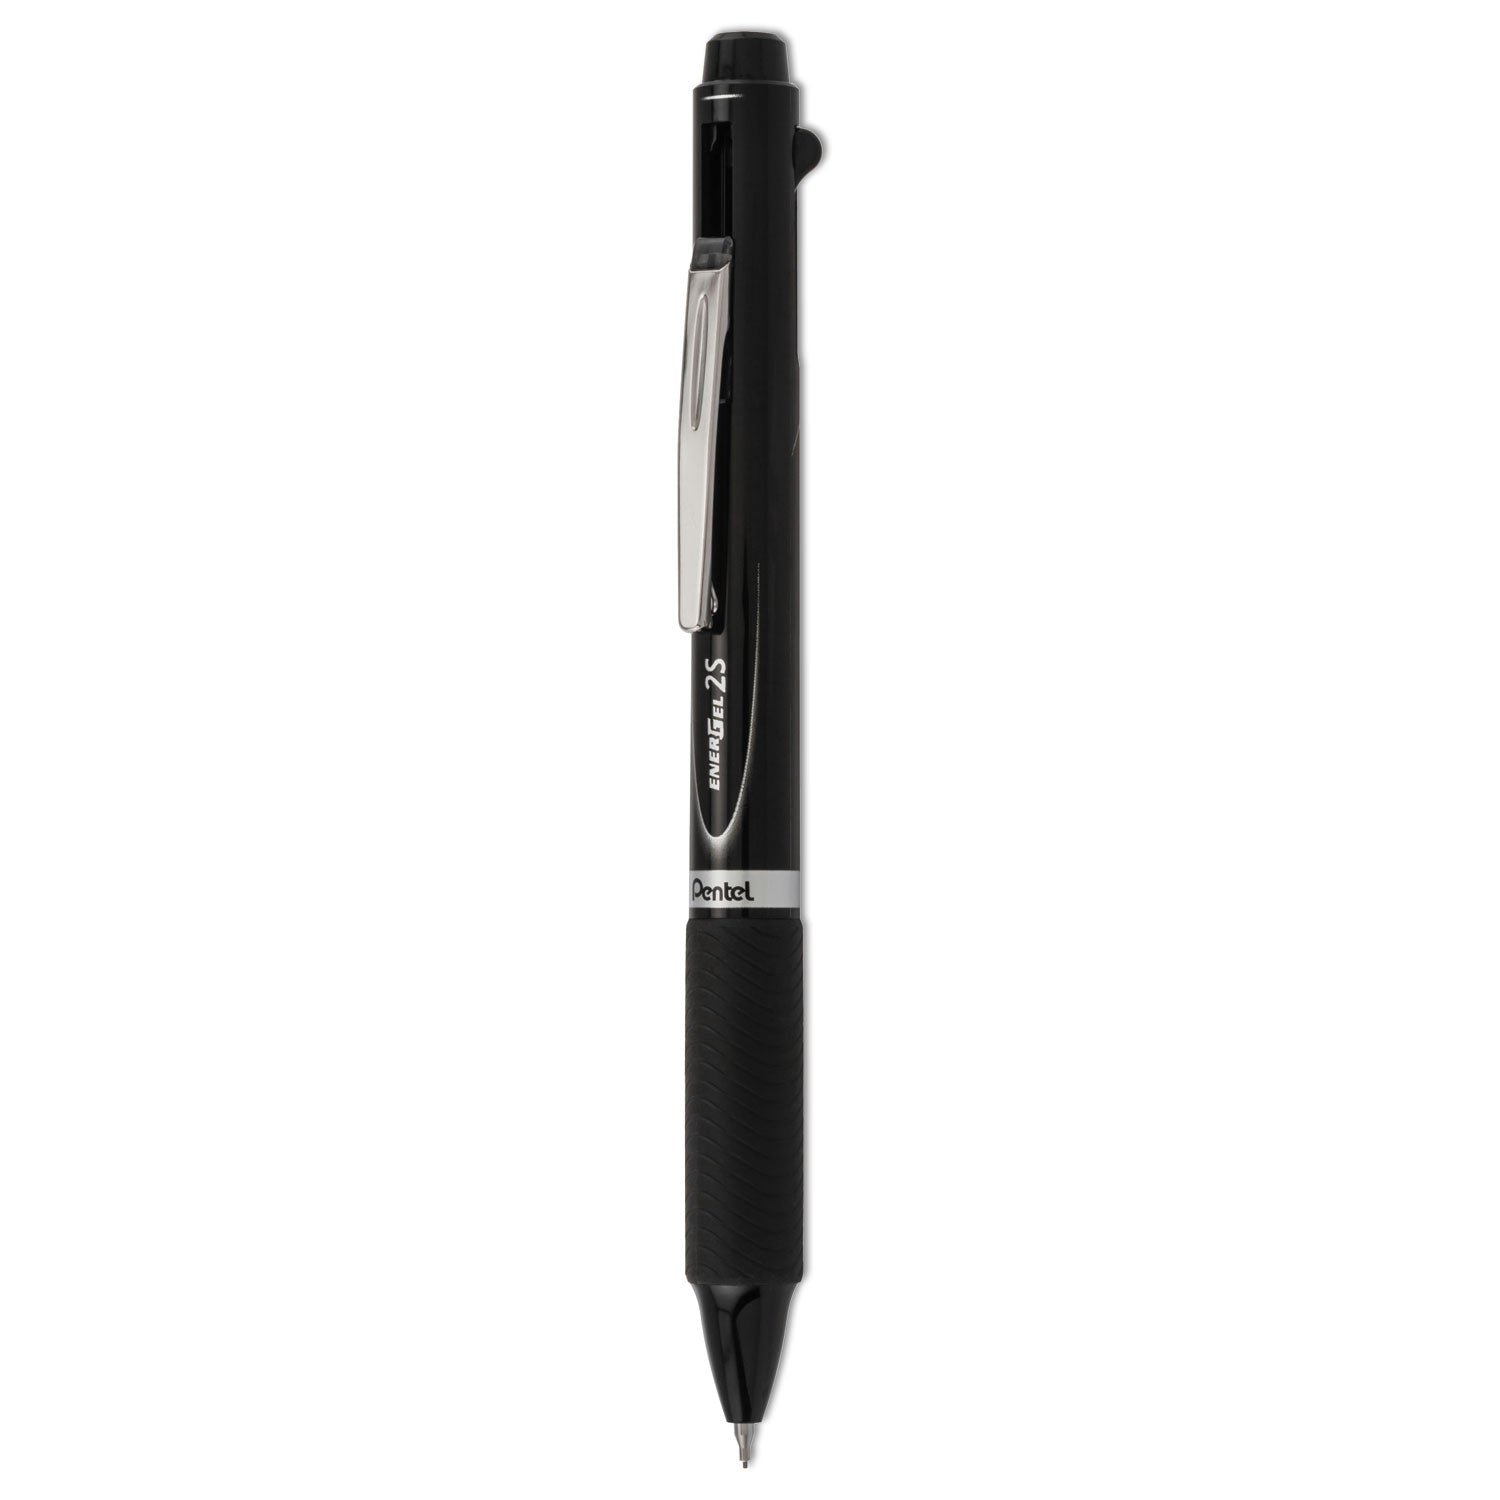 energel-2s-multi-color-gel-pen-pencil-retractable-medium-05-mm-black-red-ink-black-barrel_penblw355a - 1